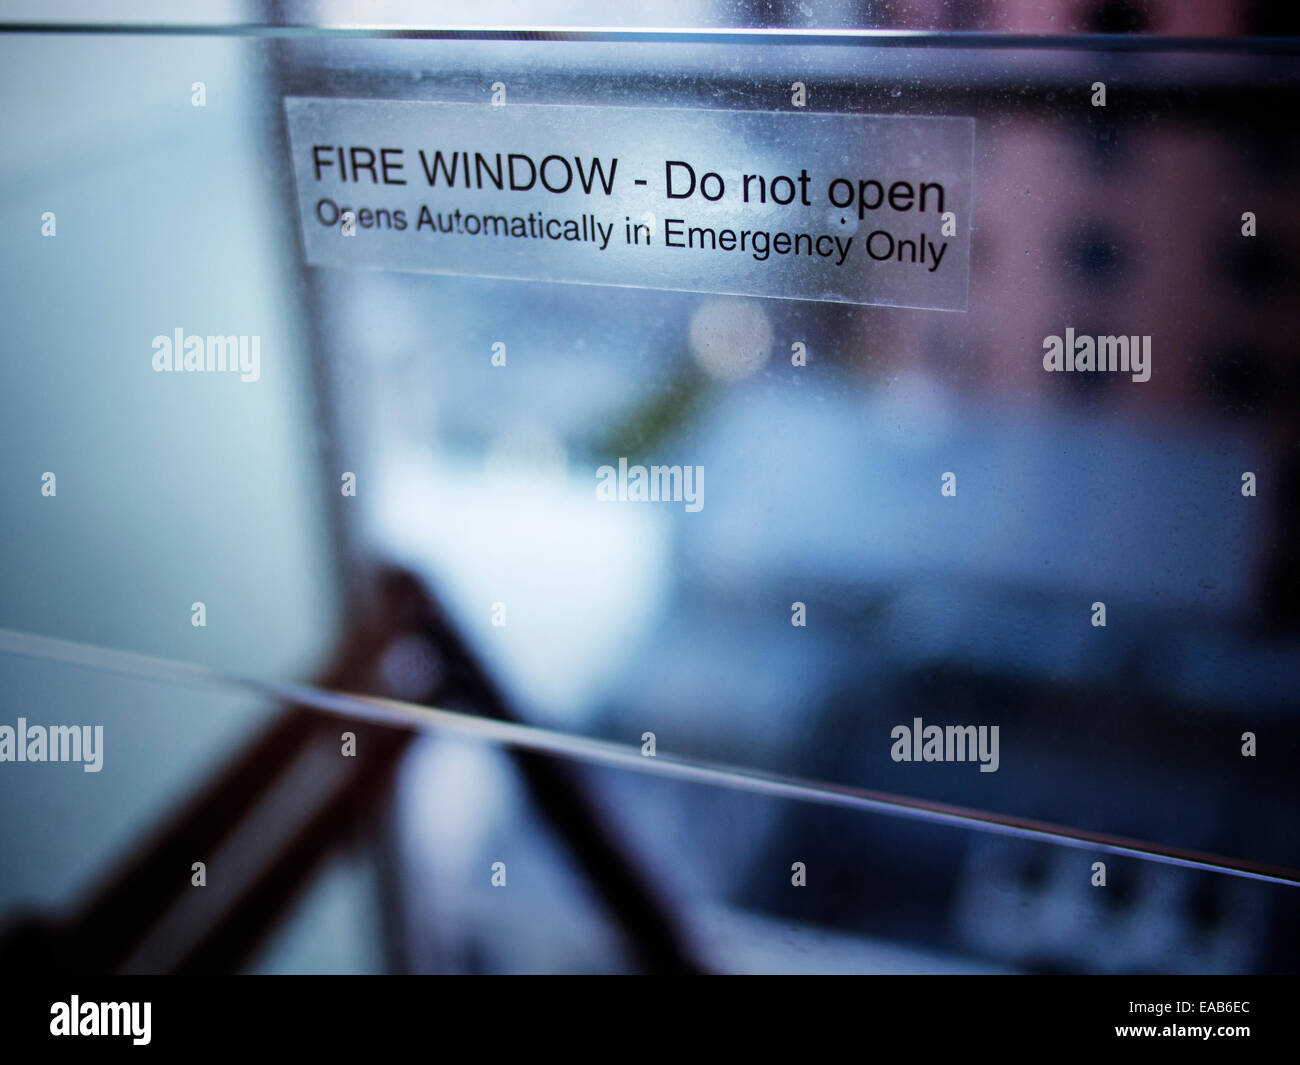 Fire window do not open Stock Photo